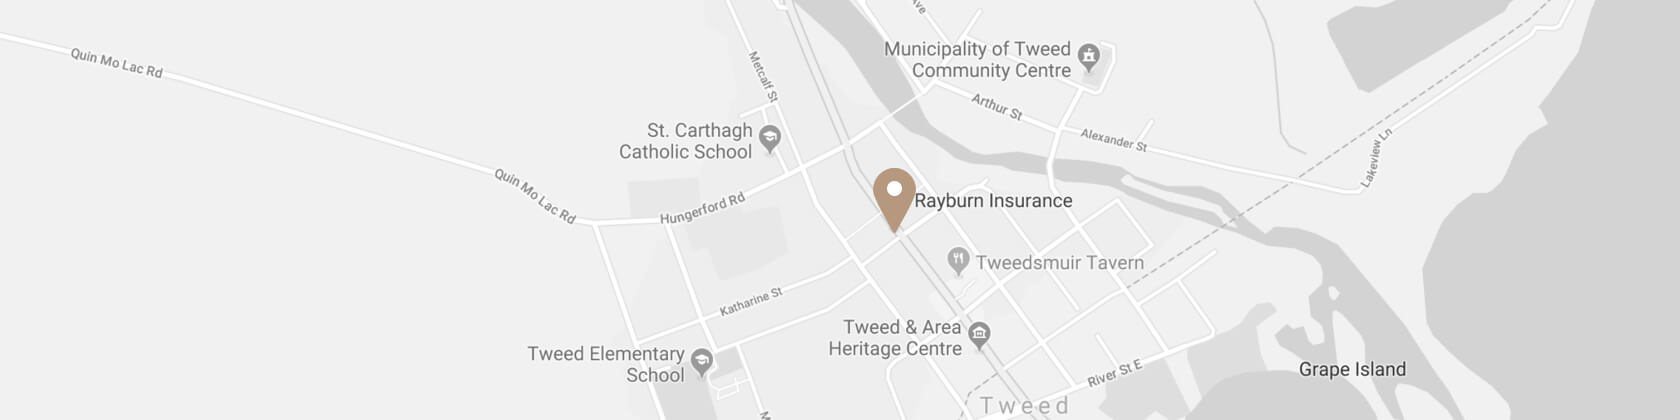 Location of Rayburn Insurance Desktop Image